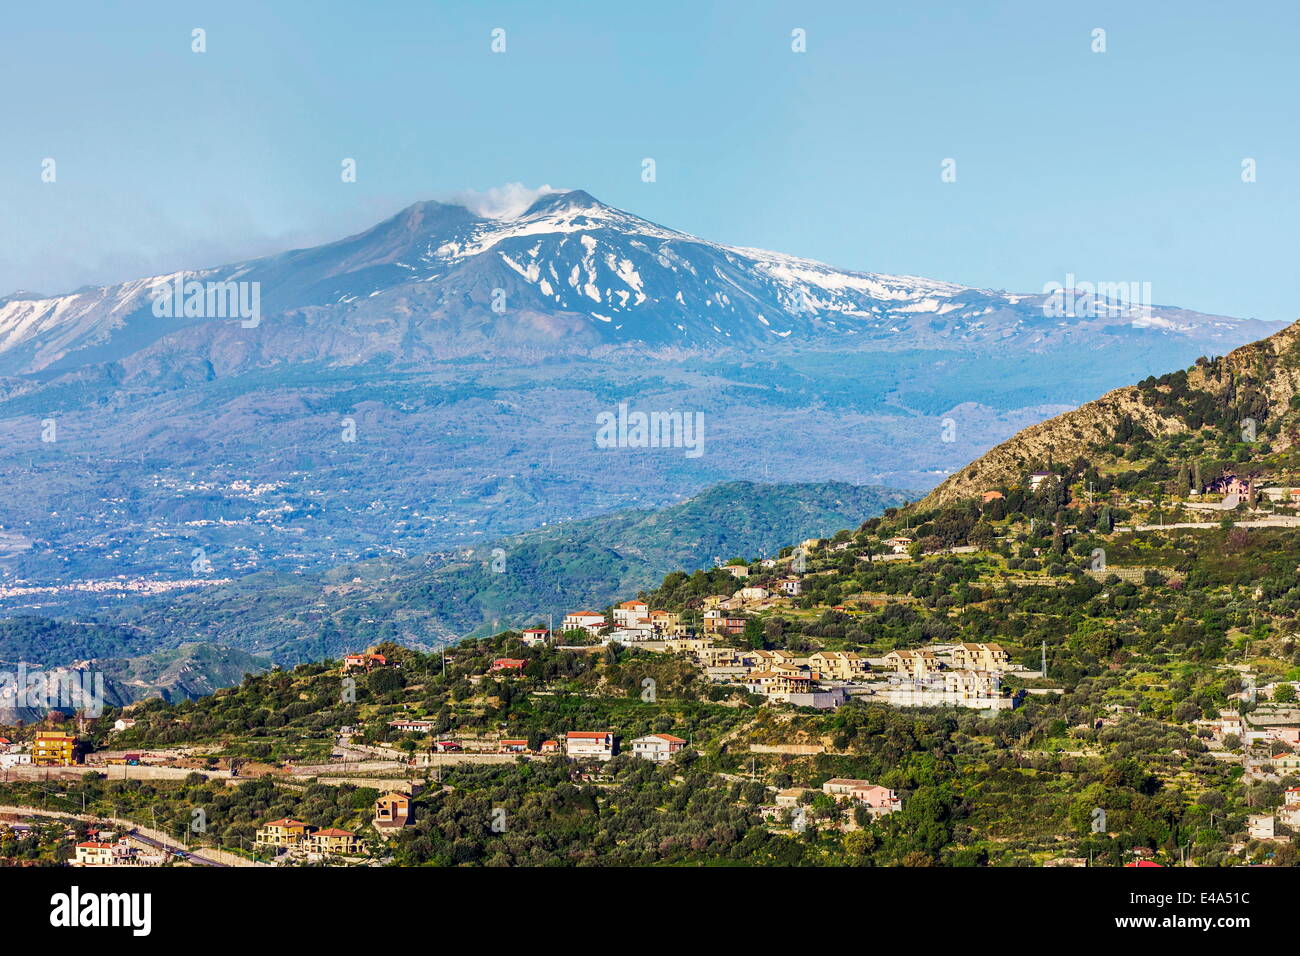 Looking from Taormina towards Trupiano and the smoking Mount Etna during an active phase, Trupiano, Sicily, Italy Stock Photo